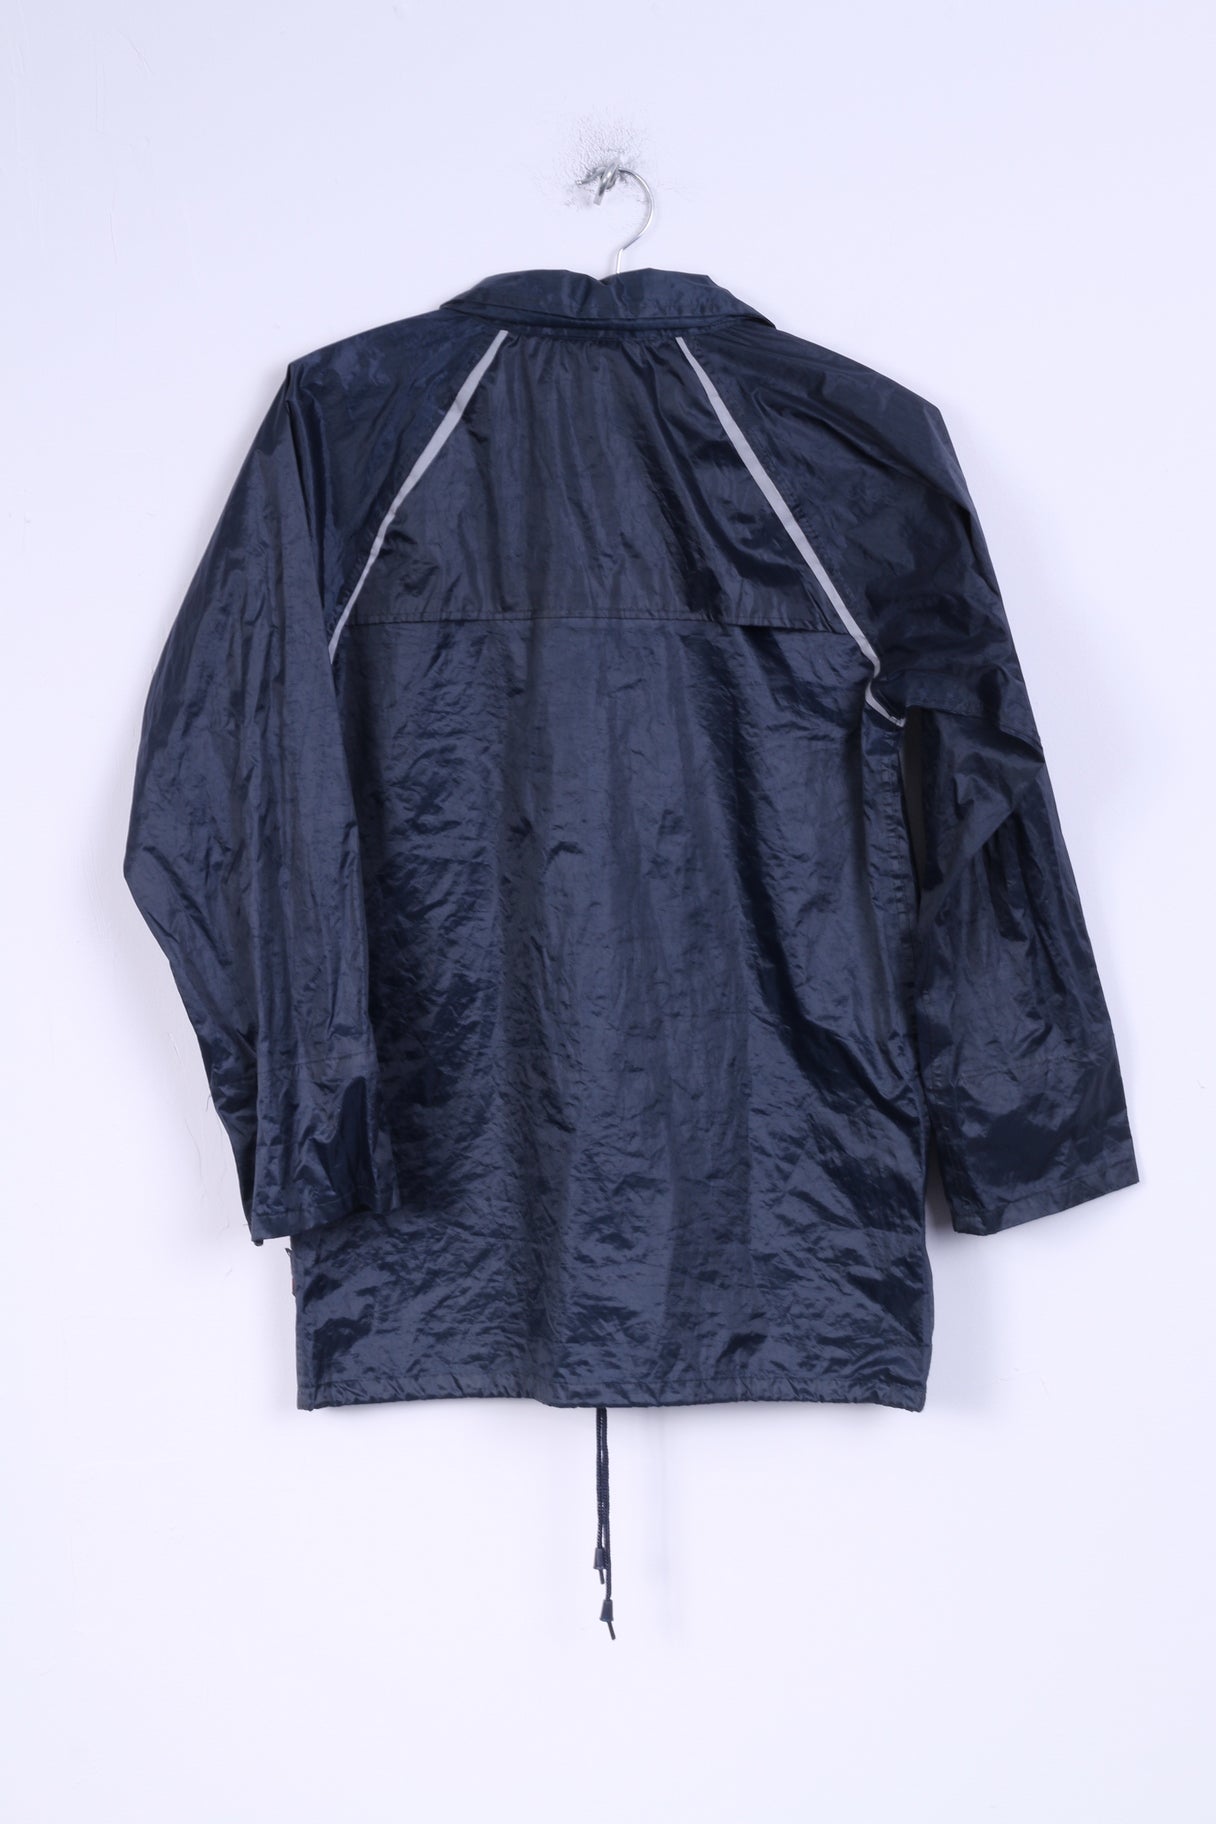 ProClimate Boys 9 / 10 Age Rain Jacket Navy Full Zipper Lightweight Top